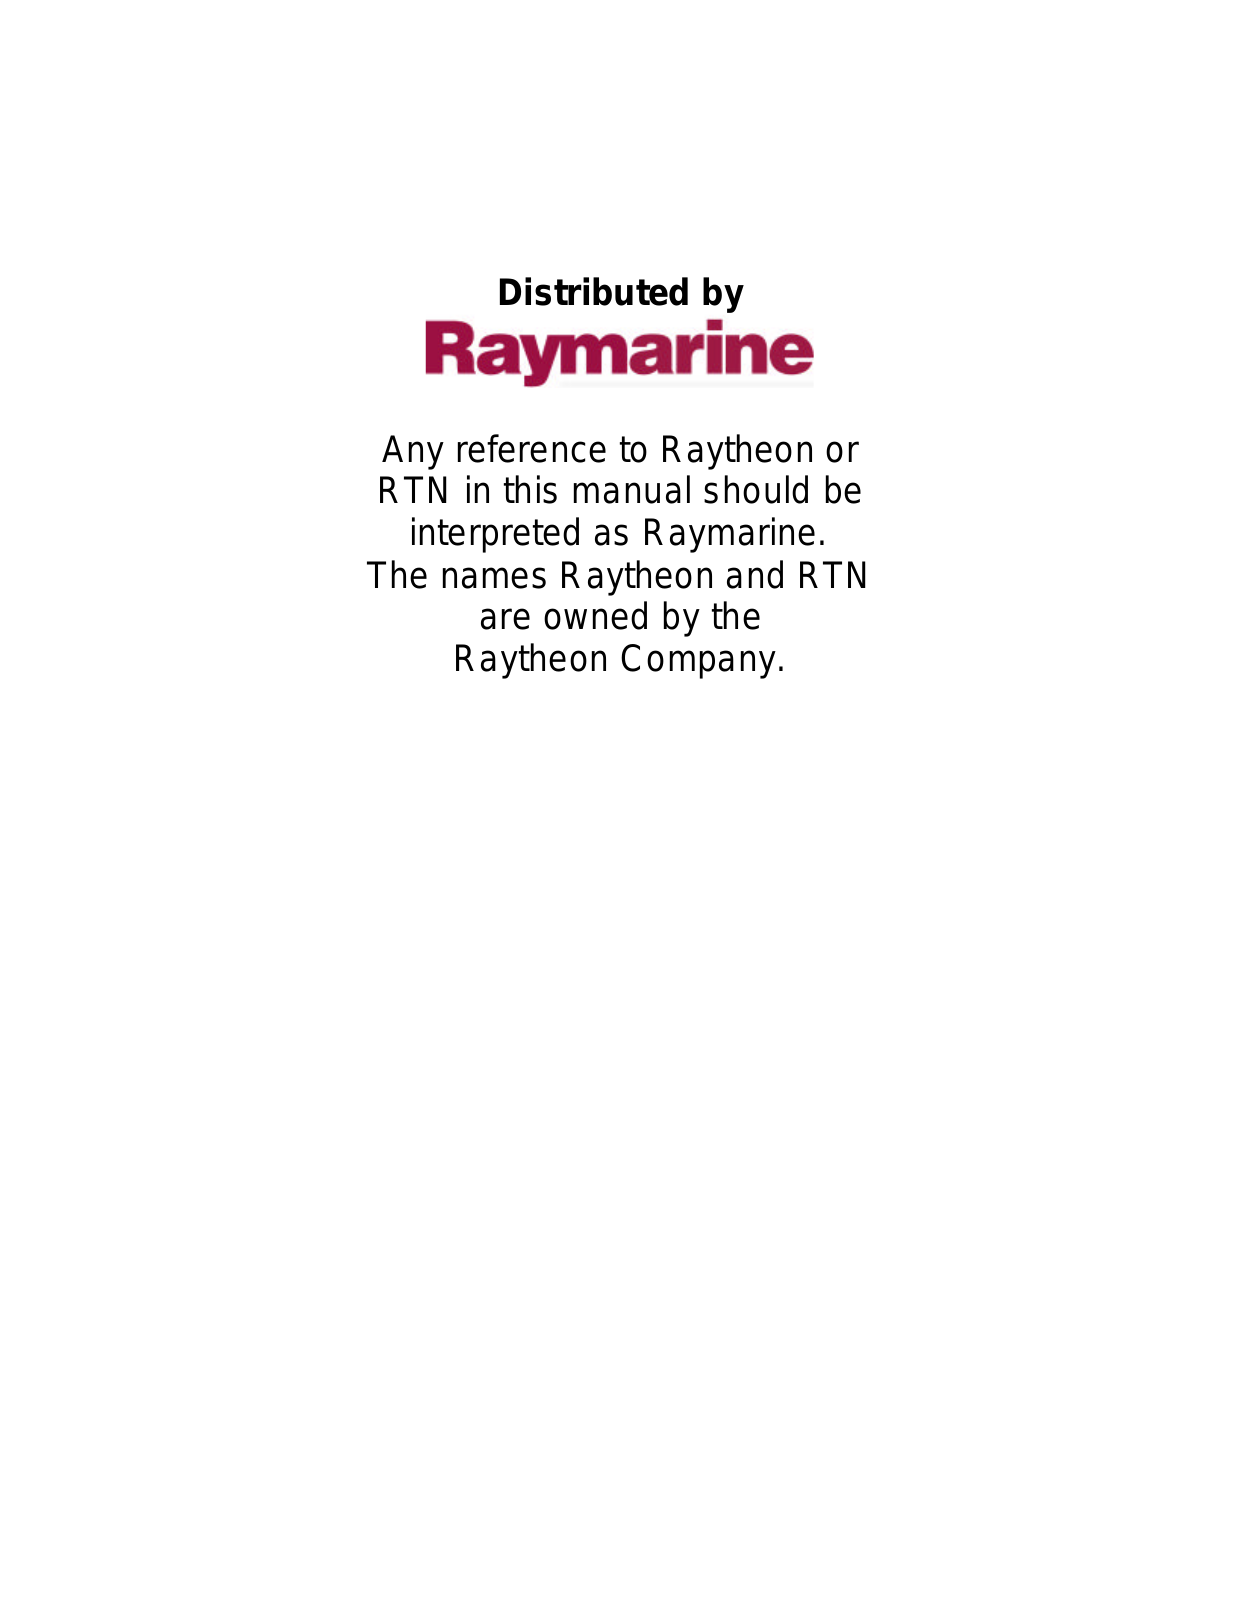 Raymarine APELCO 501+ Manual